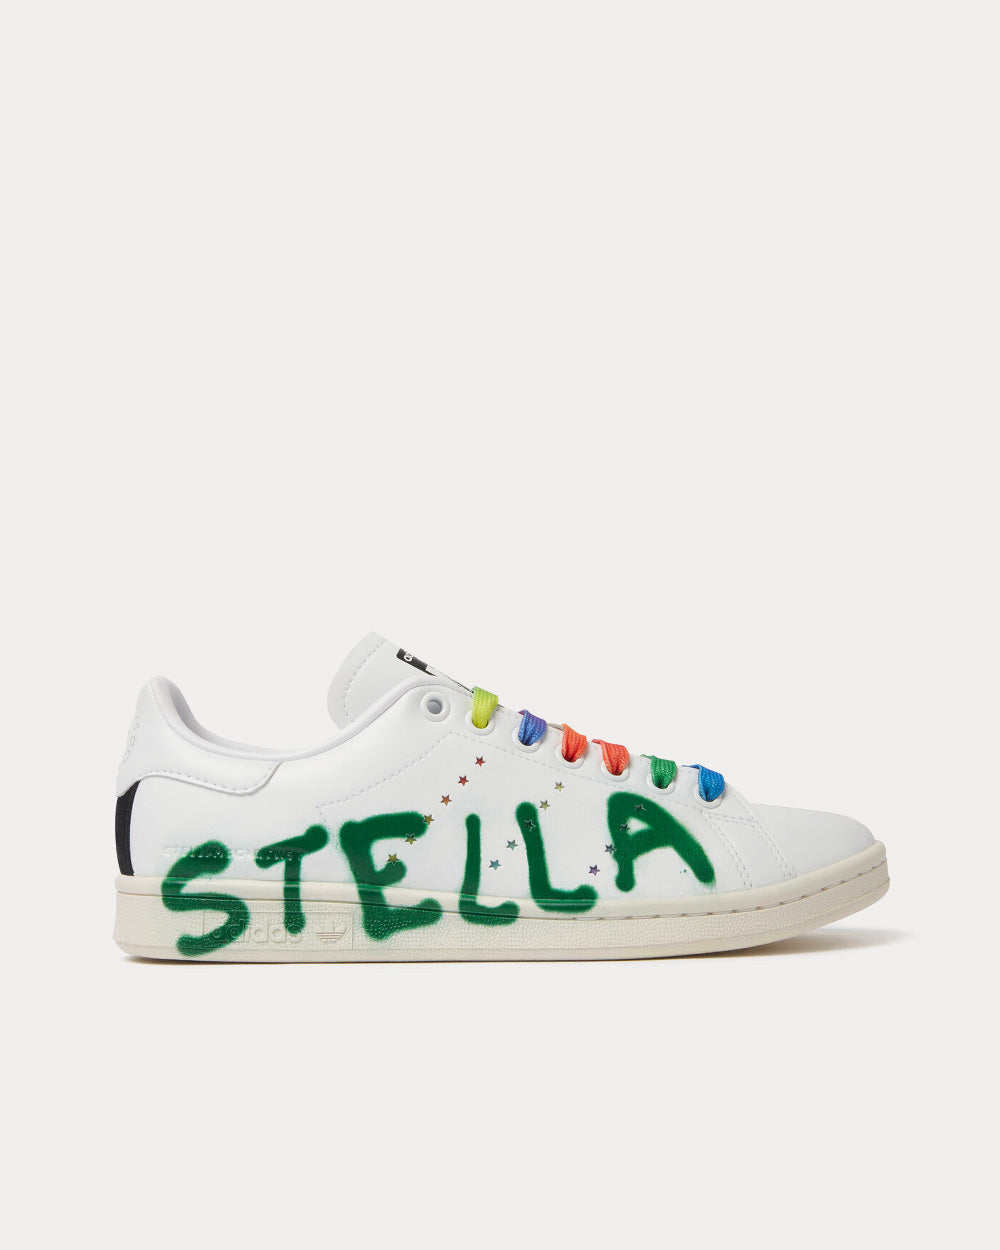 Adidas X Stella McCartney - x Ed Curtis Vegan Stan Smith White / Green Low Top Sneakers